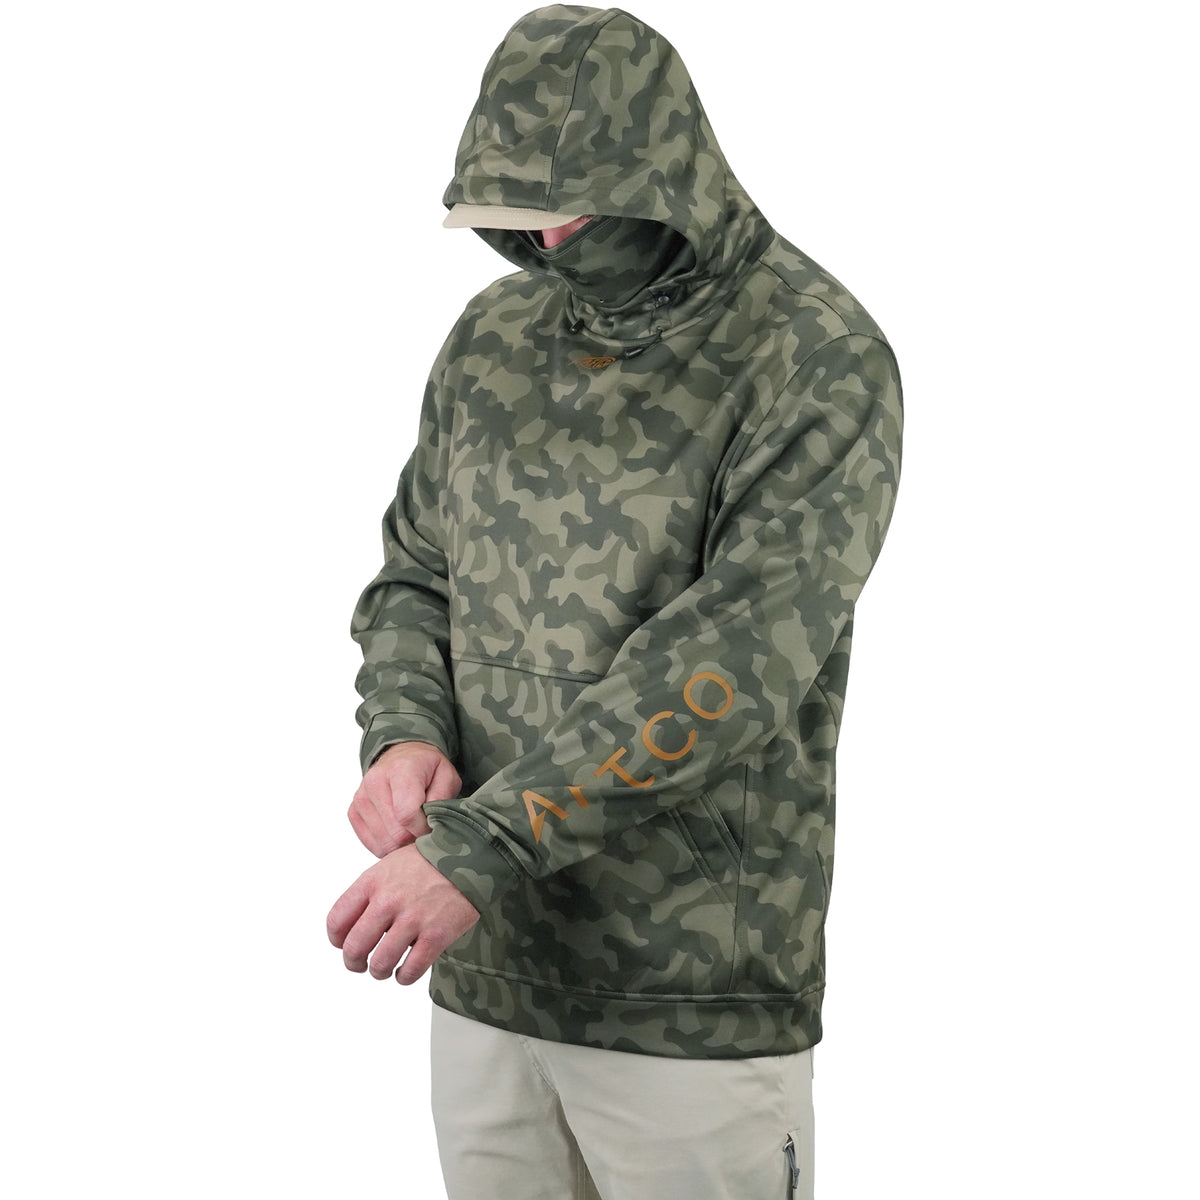 AFTCO Reaper Tactical Sweatshirt